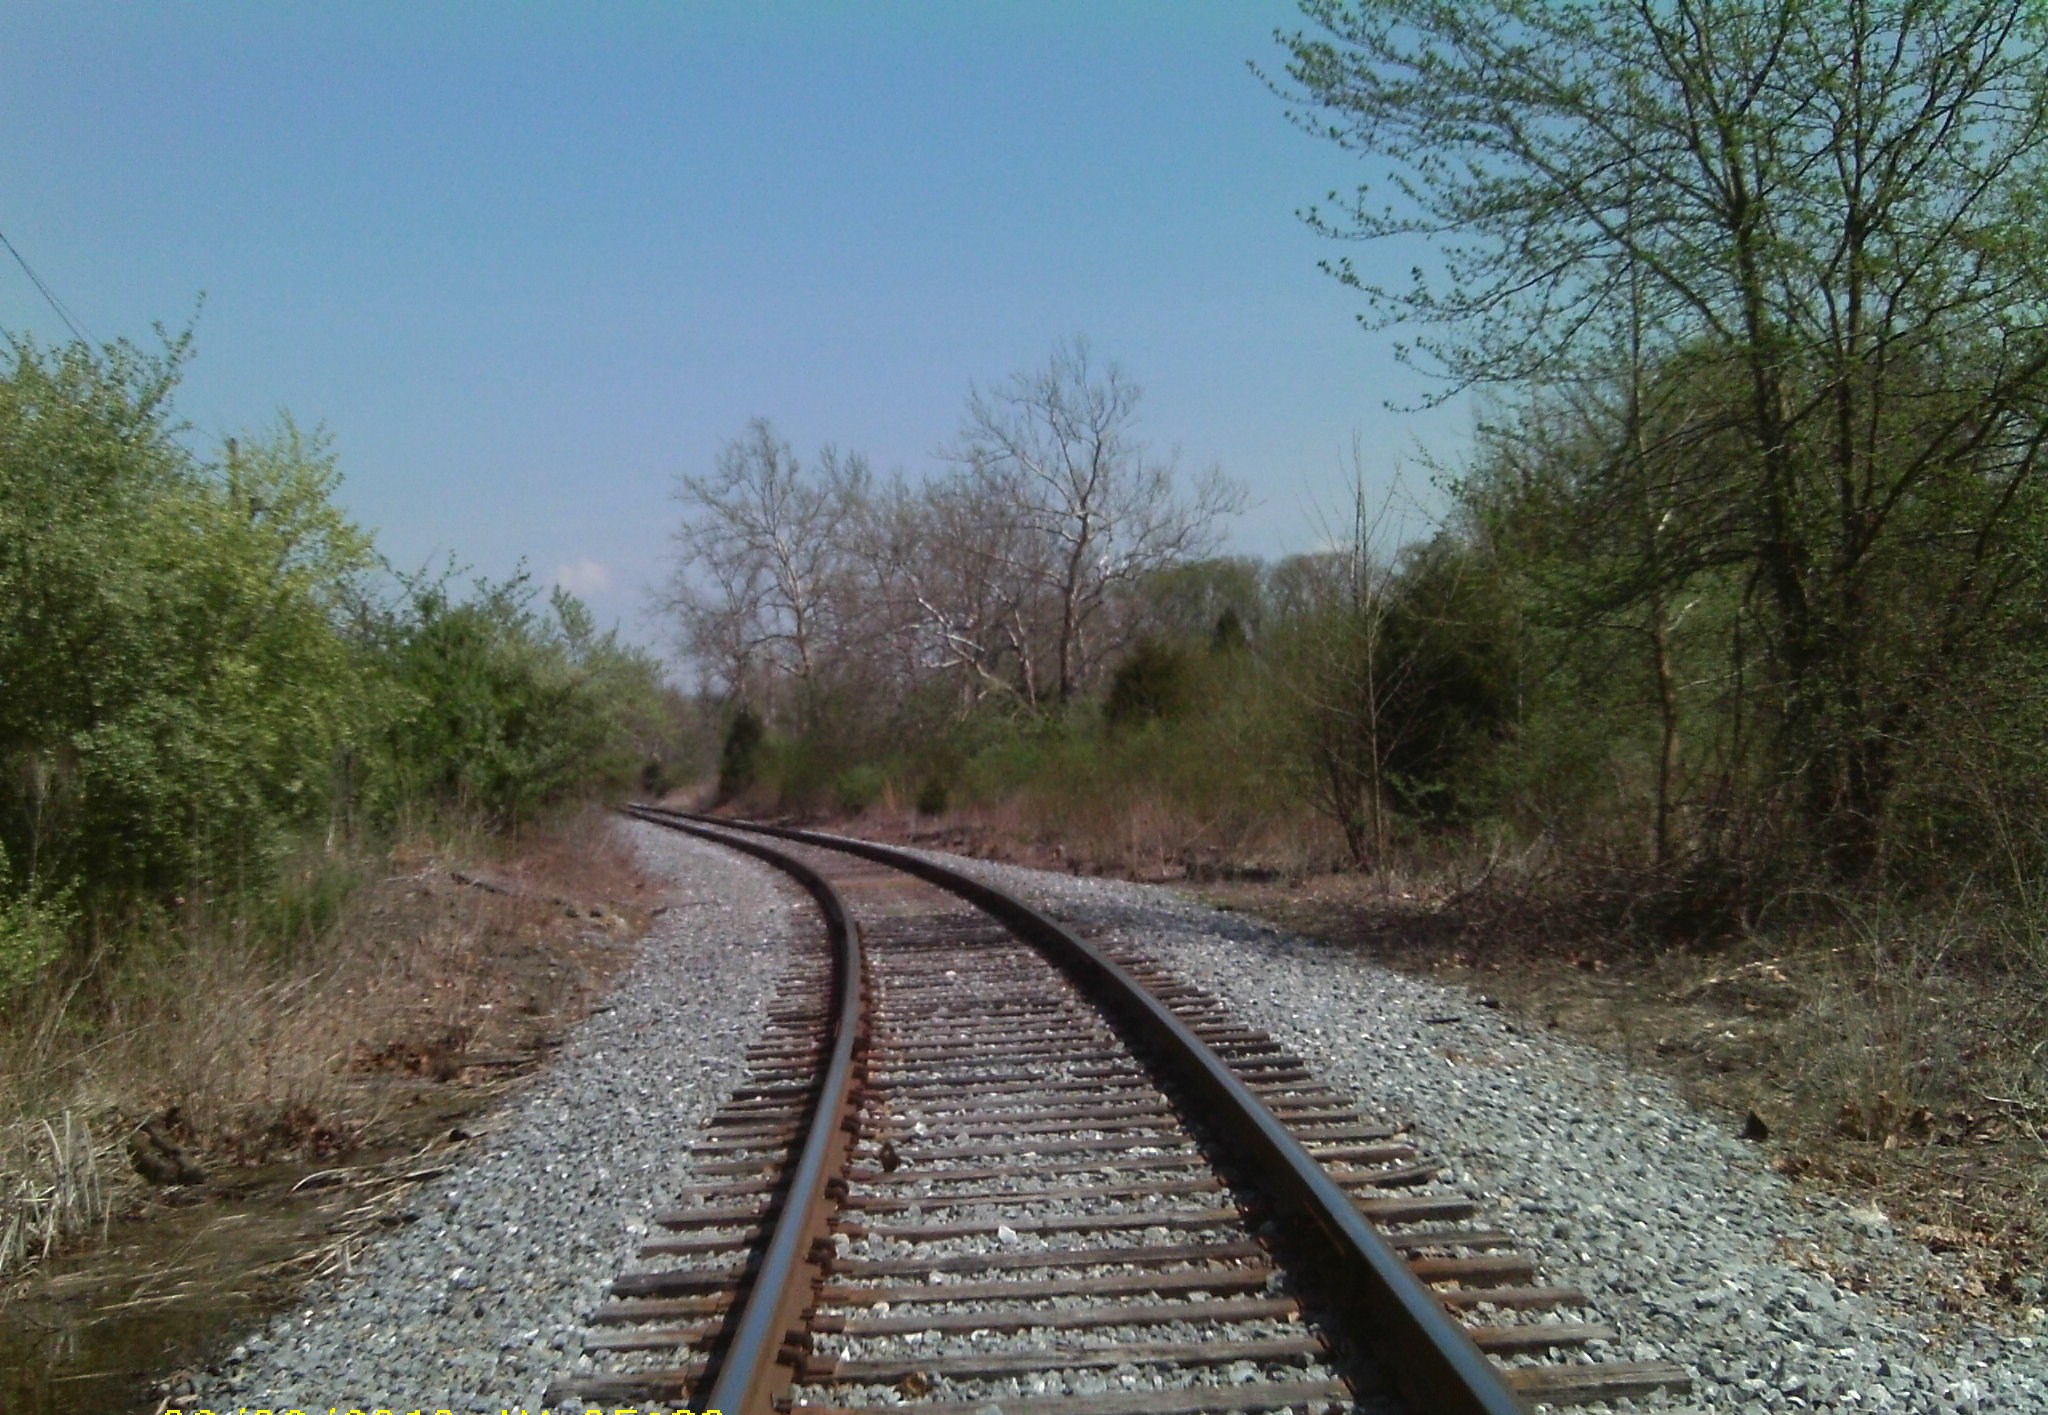 Man Made Railroad HD Wallpaper | Background Image